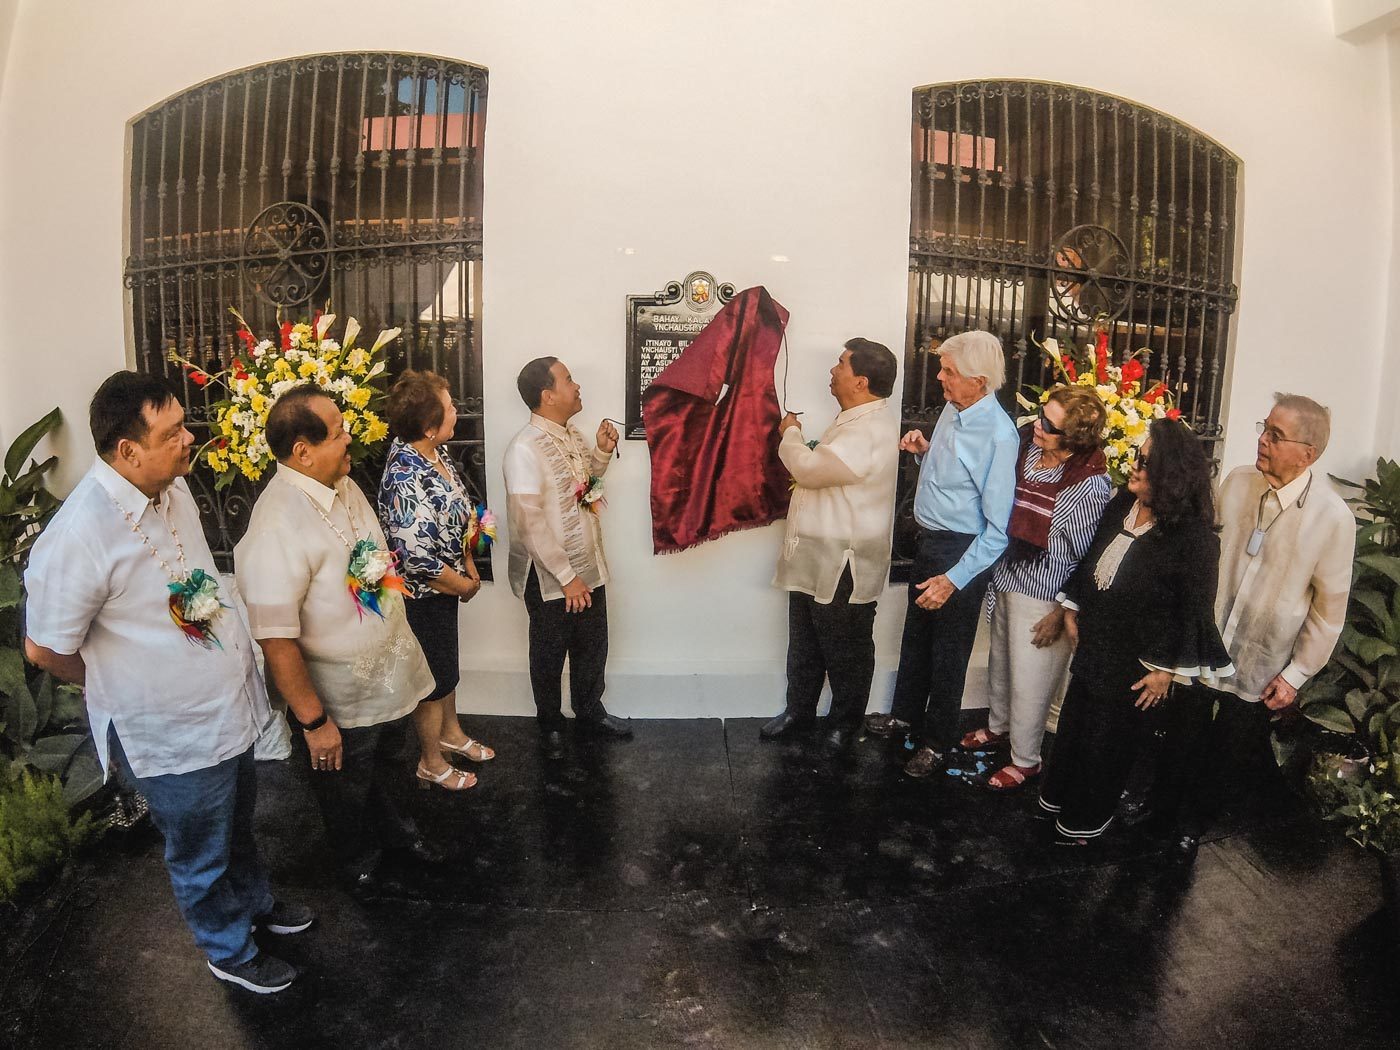 IN PHOTOS: Museum of Philippine Economic History opens in Iloilo